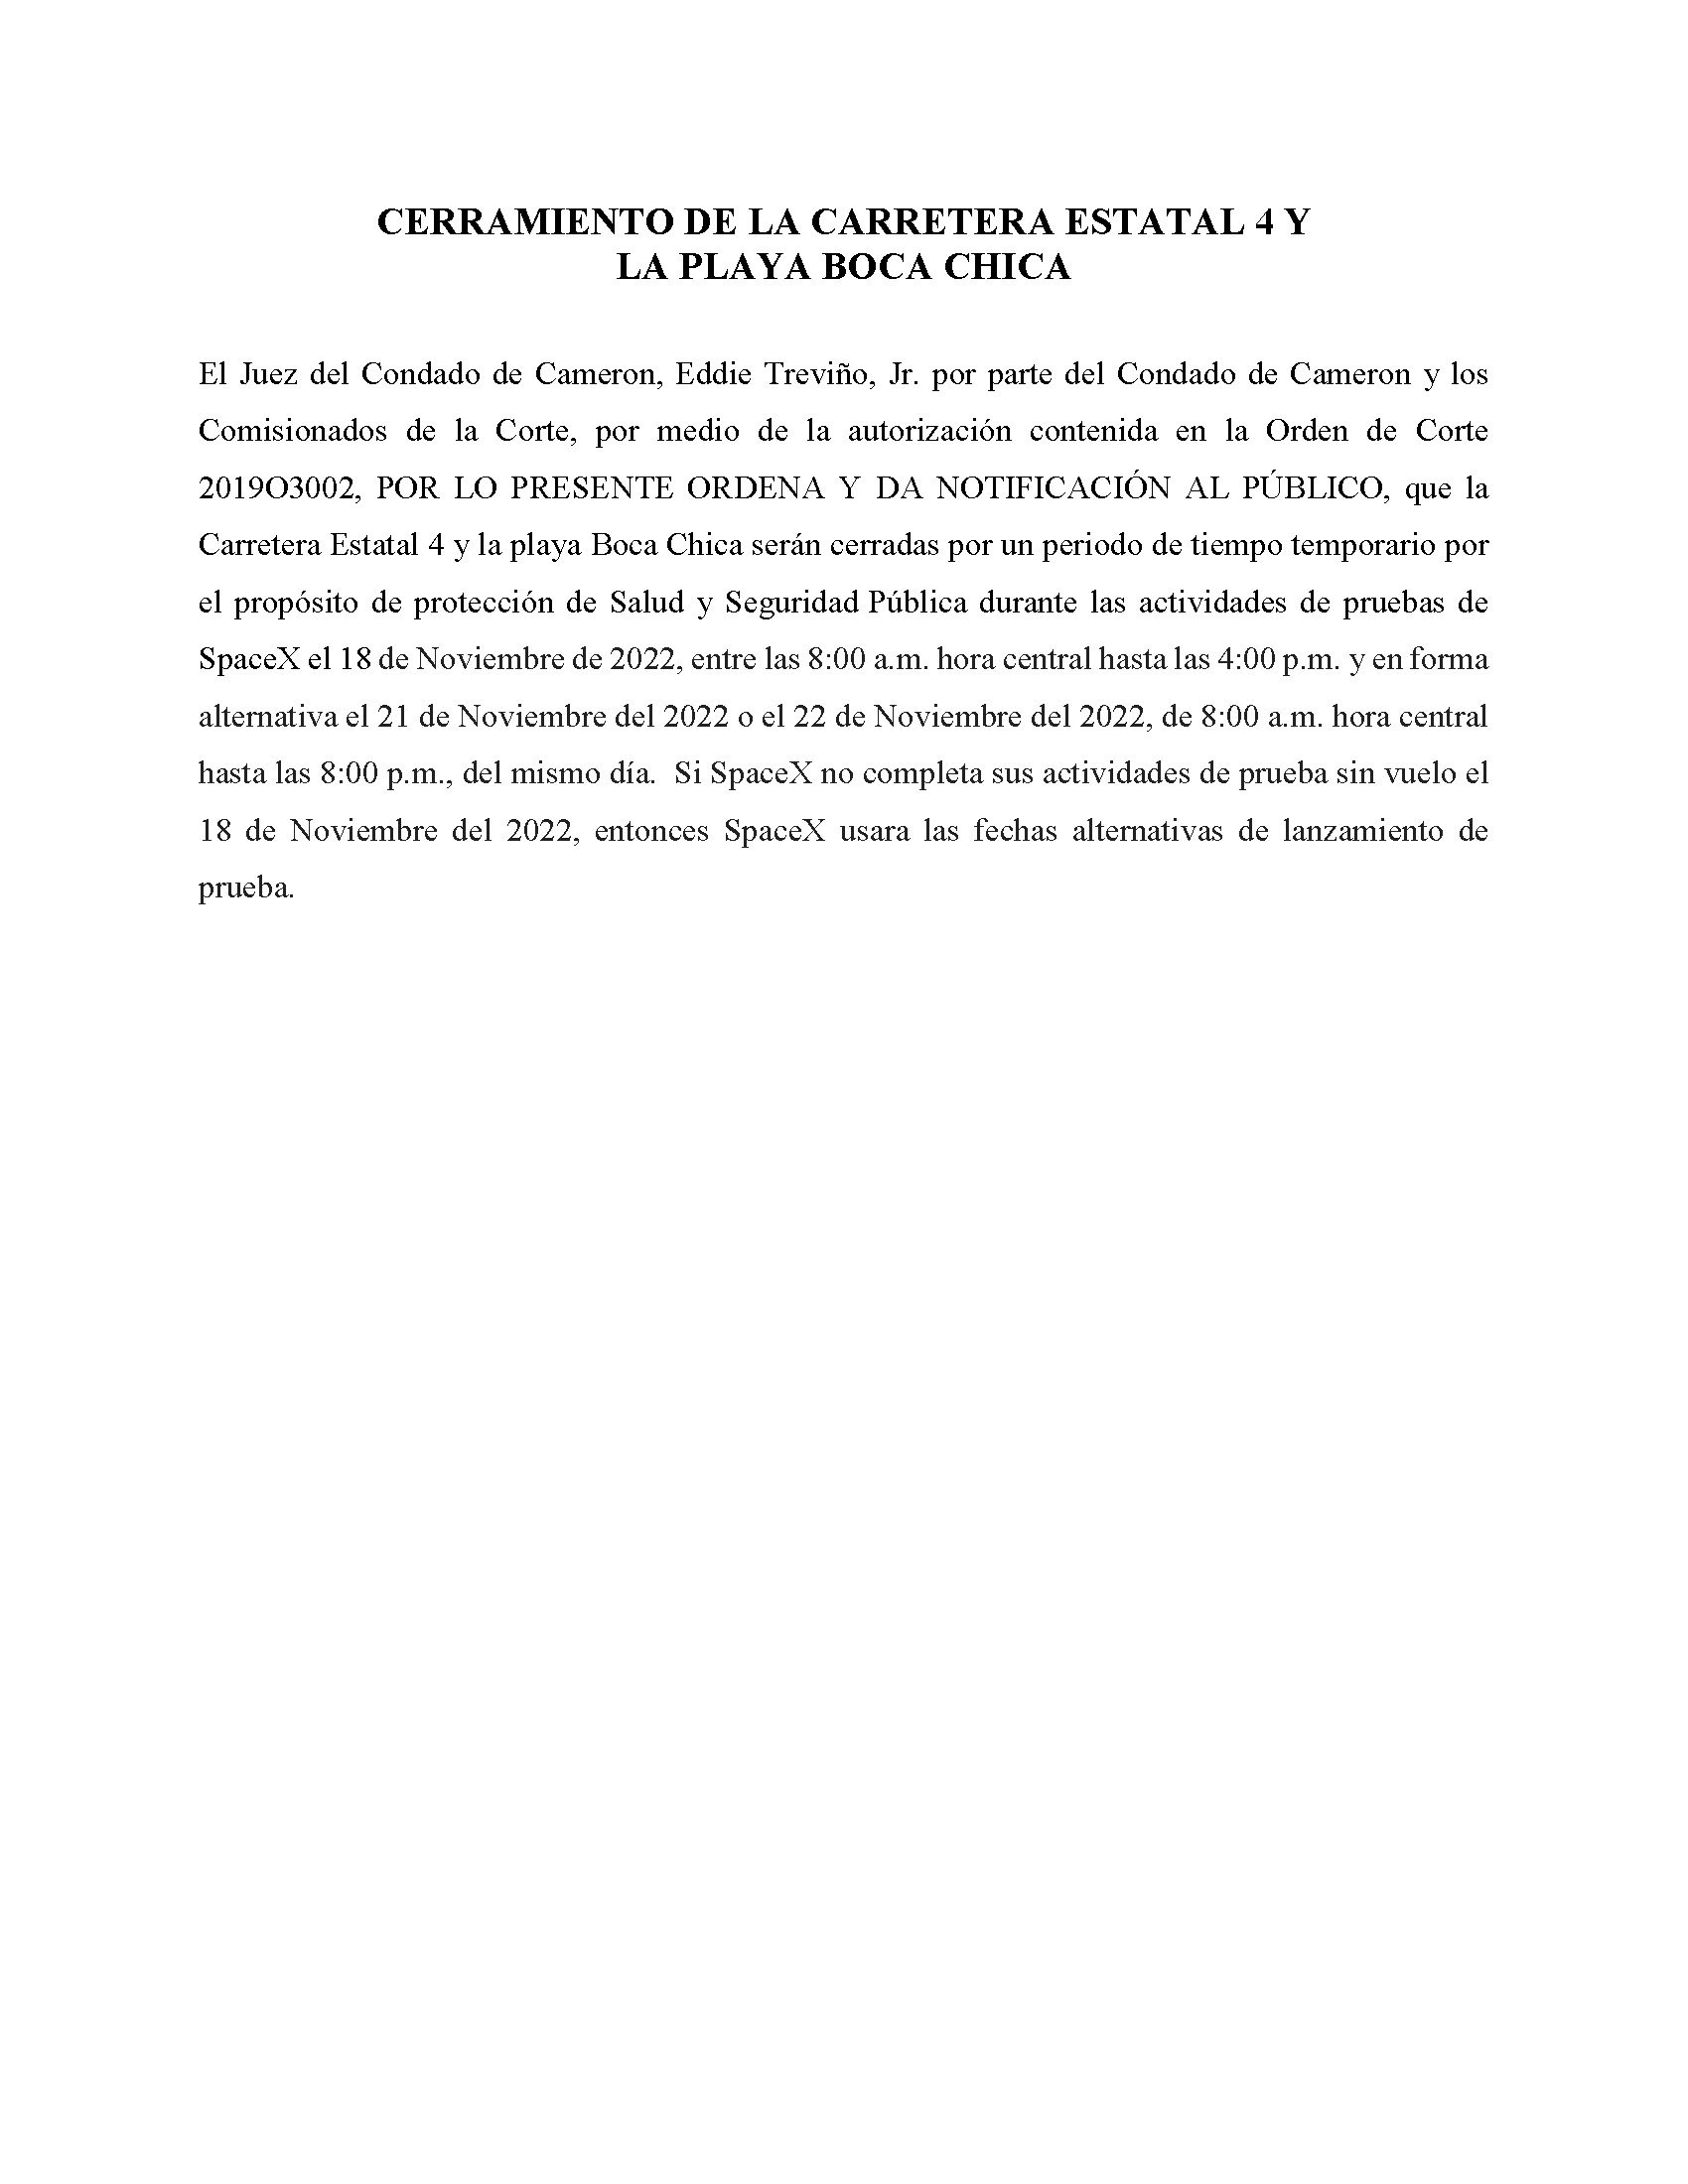 ORDER.CLOSURE OF HIGHWAY 4 Y LA PLAYA BOCA CHICA.SPANISH.11.18.2022